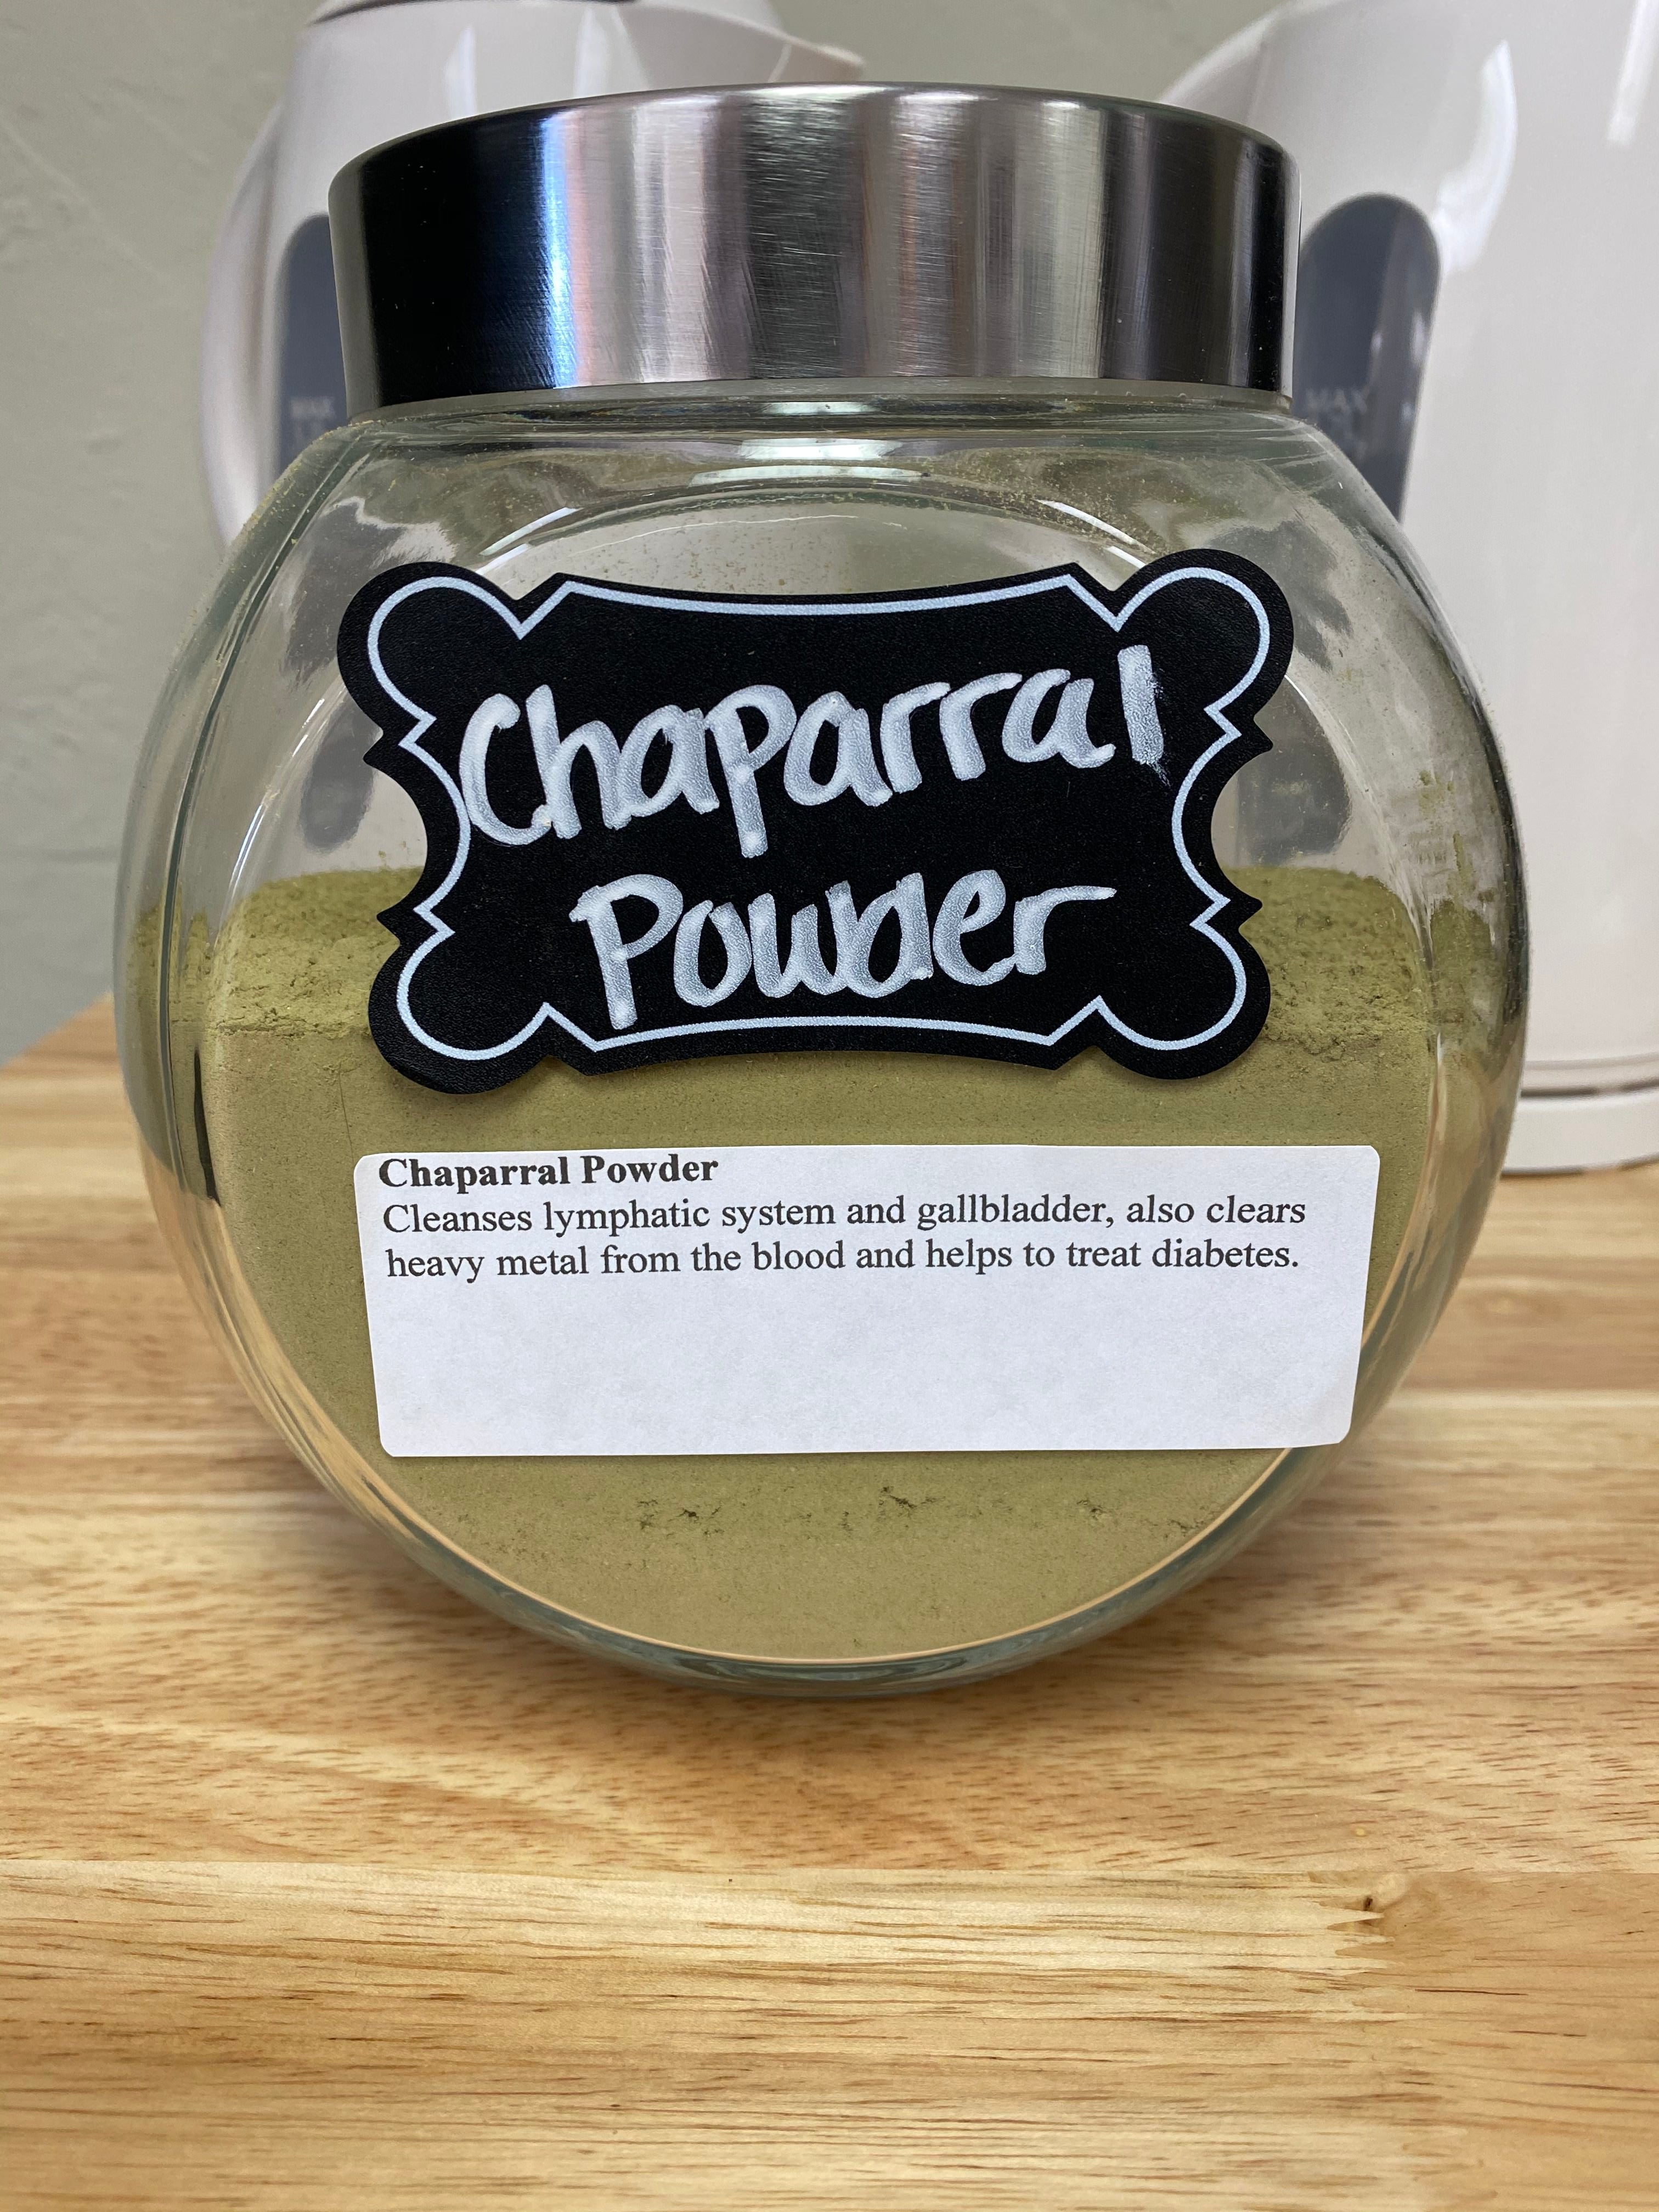 Chaparral powder